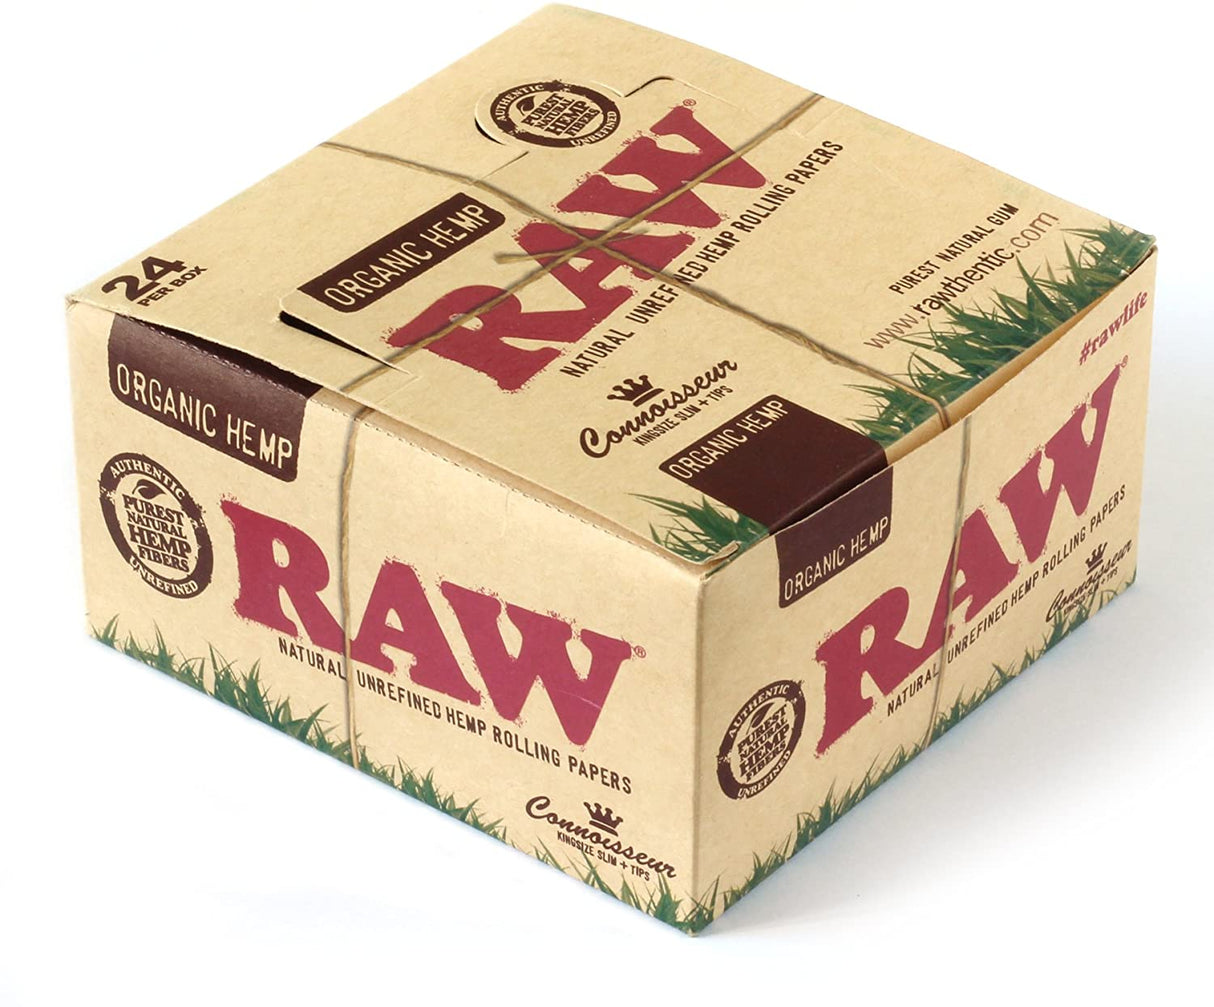 Raw Organic Hemp 1.25 1 1/4 Size Rolling Papers Full - Box of 24 Packs